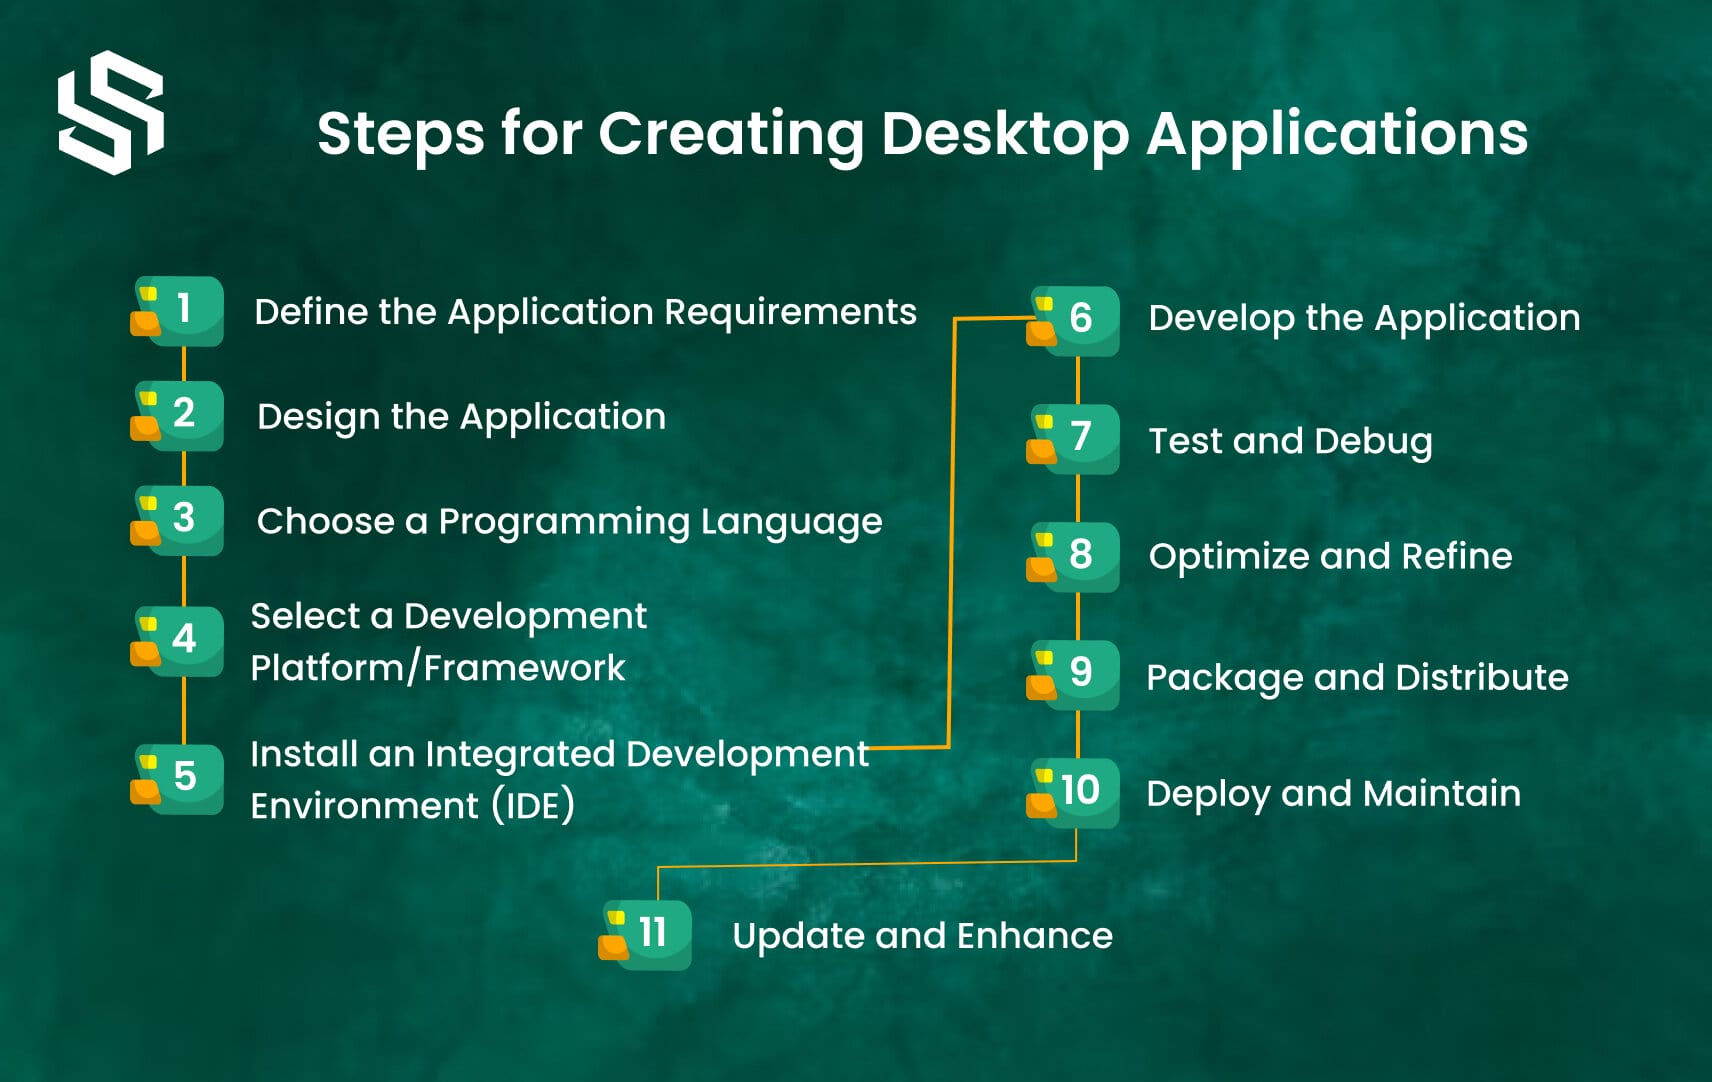 Steps for Creating Desktop Applications